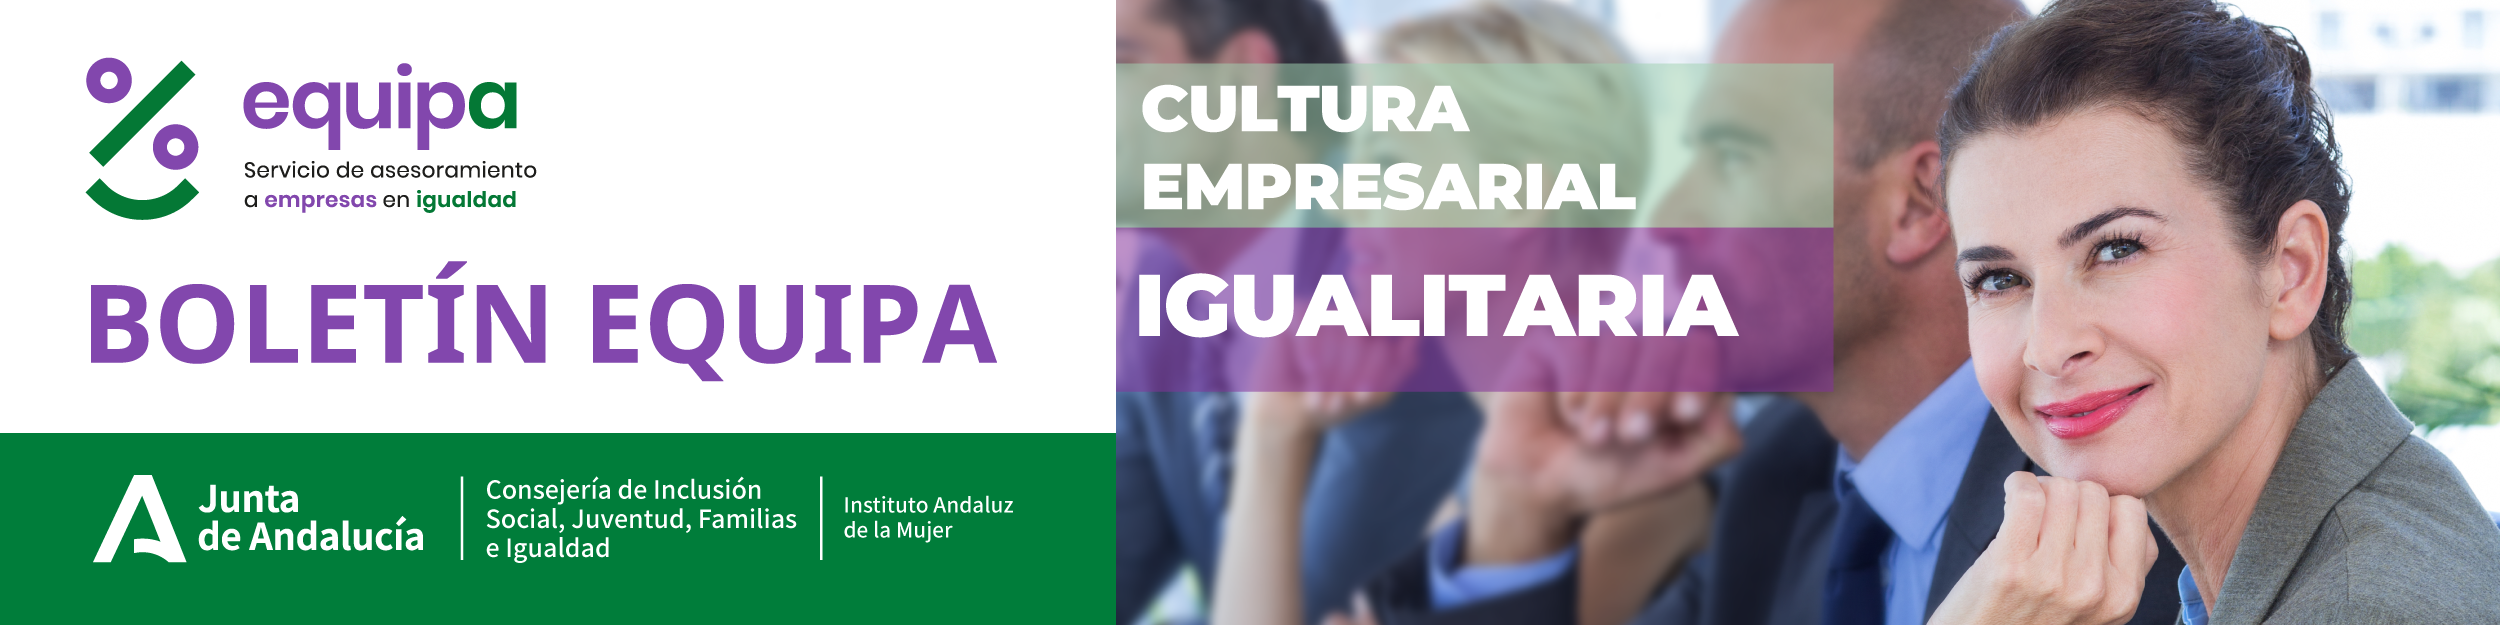 Boletín Equipa - Cultura empresarial Igualitaria